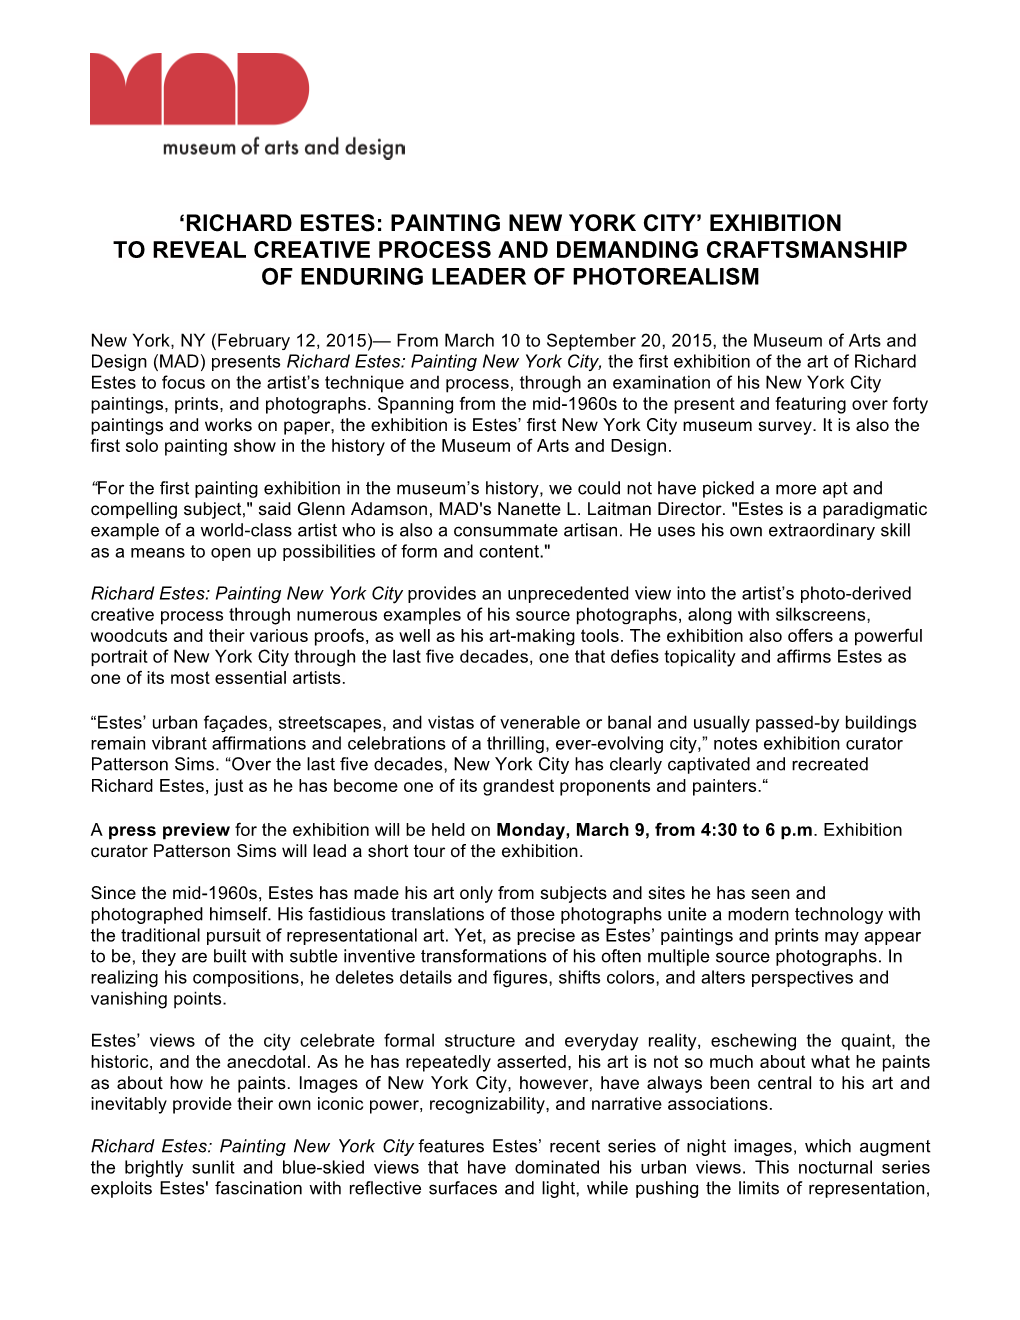 Richard Estes Press Release